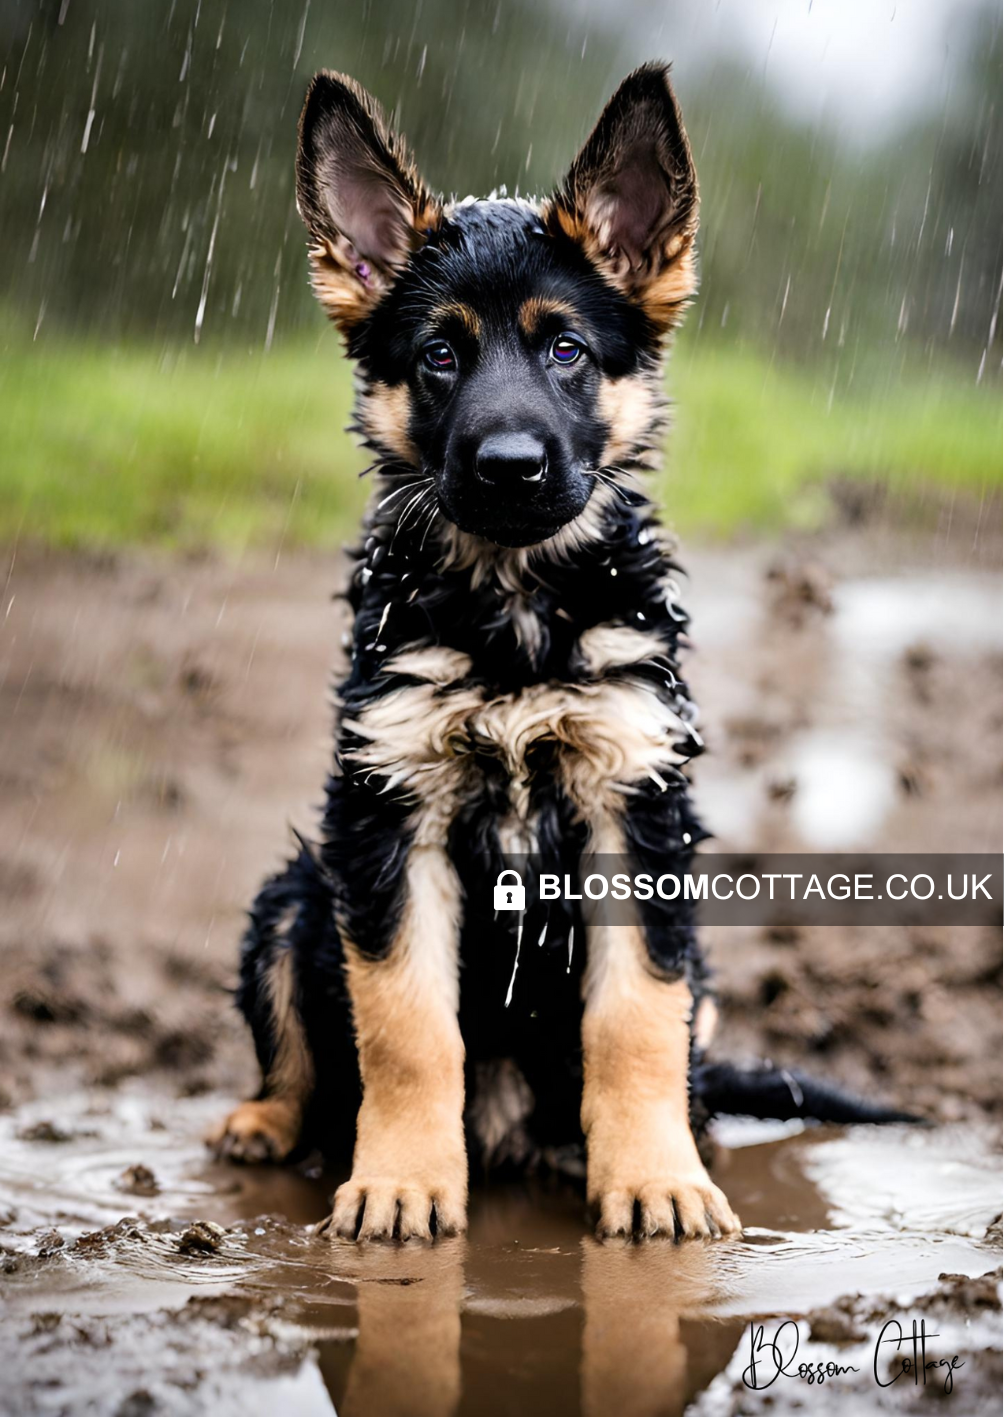 German Shepherd - "Rainy Day Adventure"